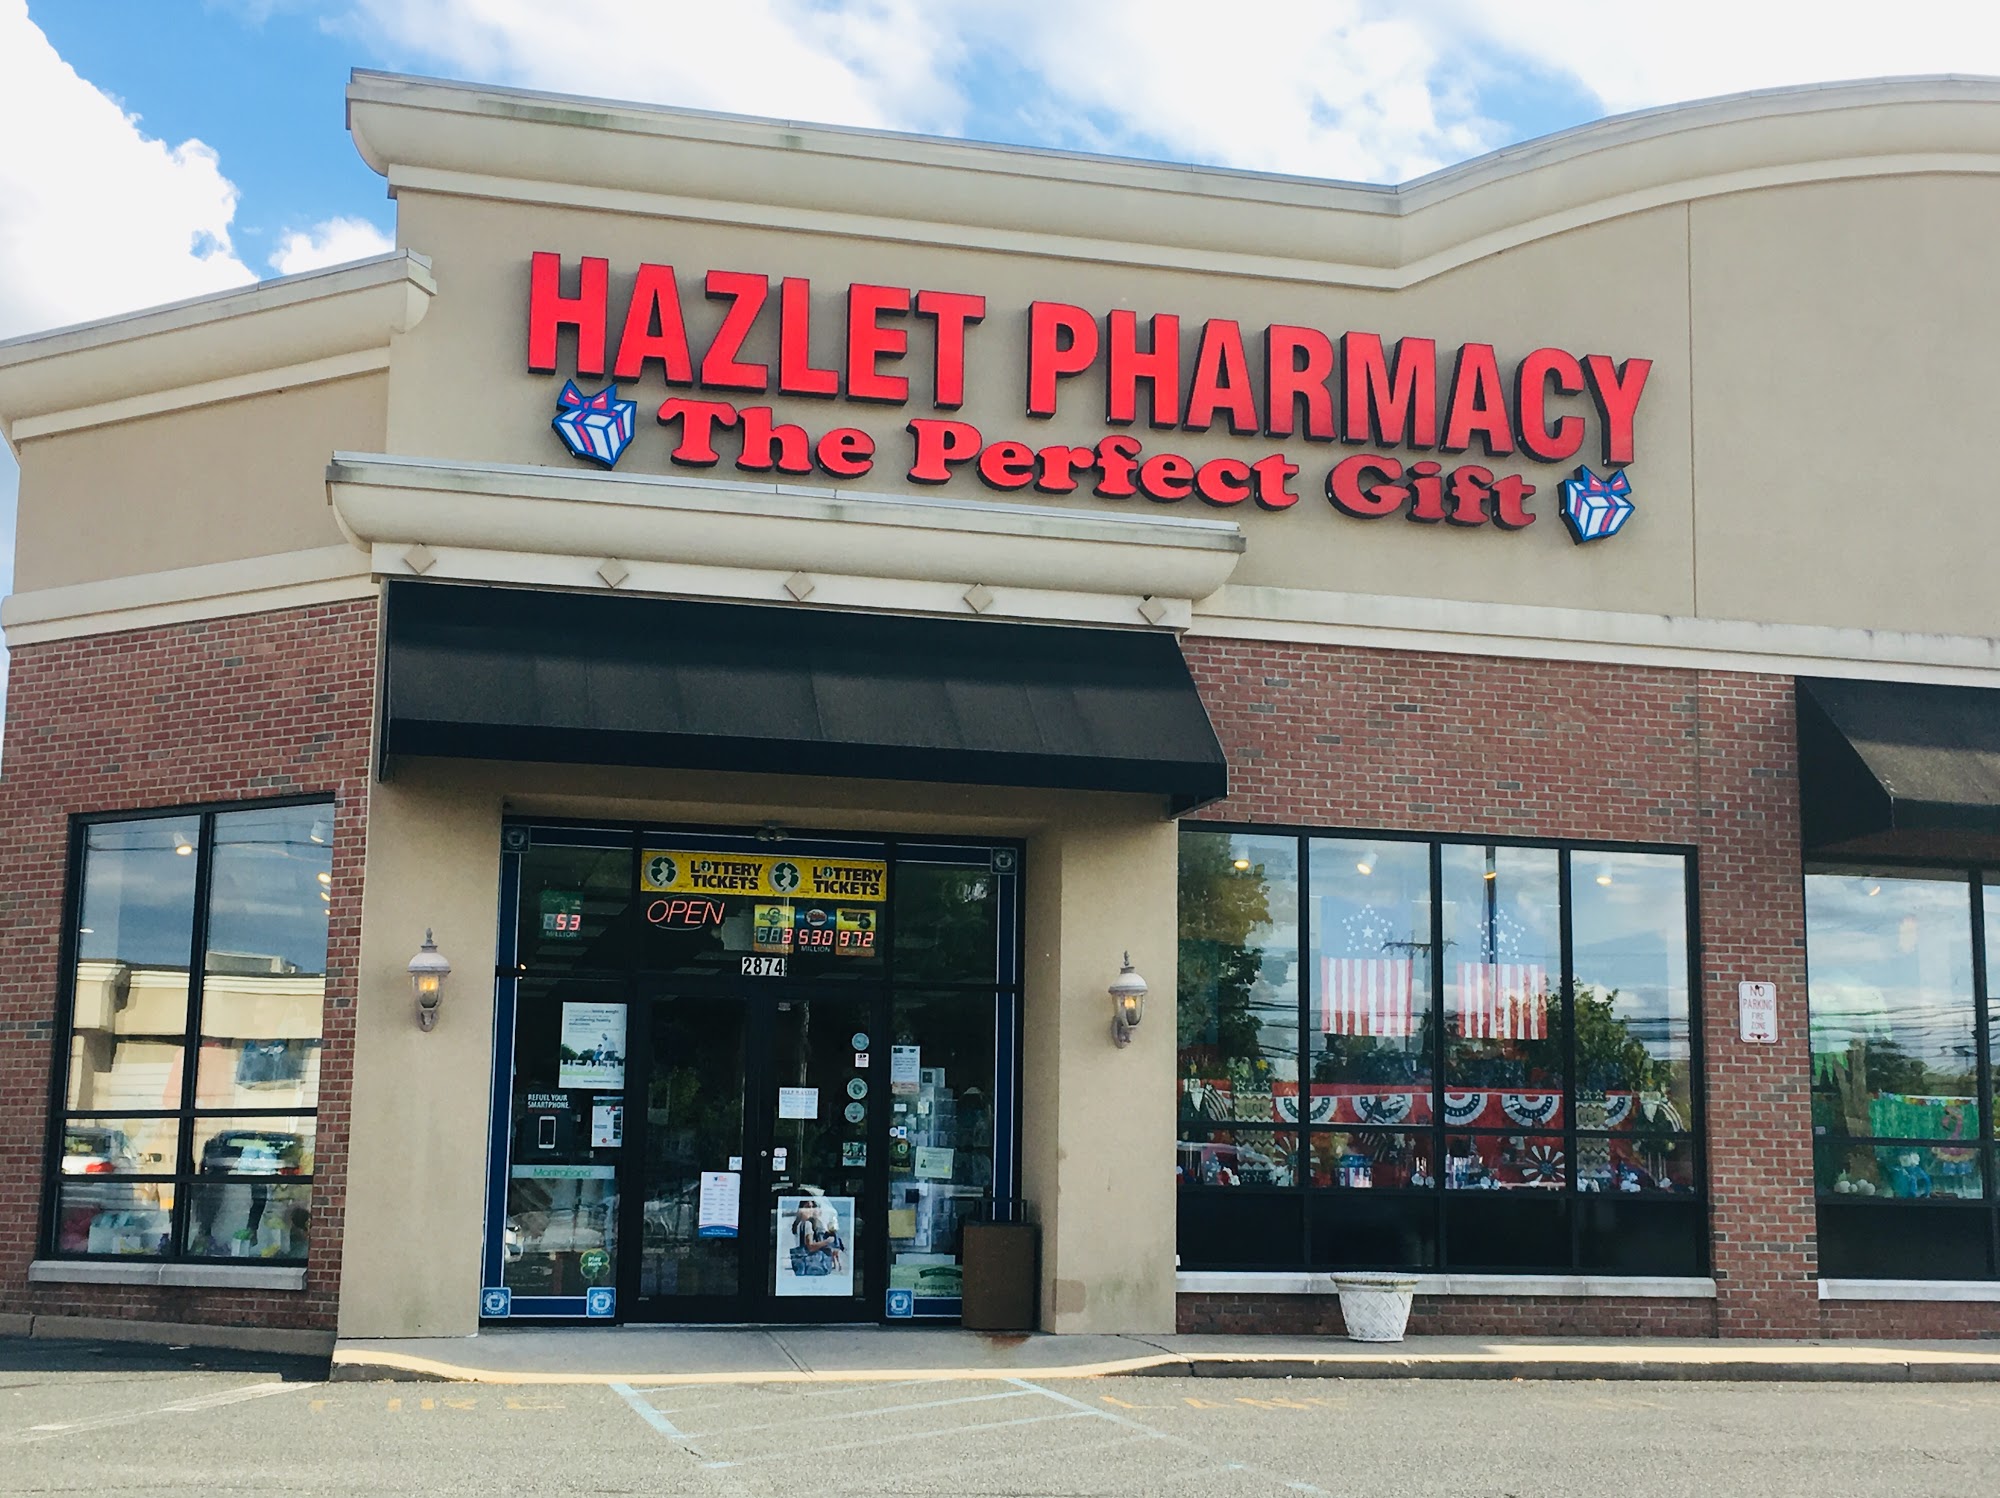 Hazlet Pharmacy Inc